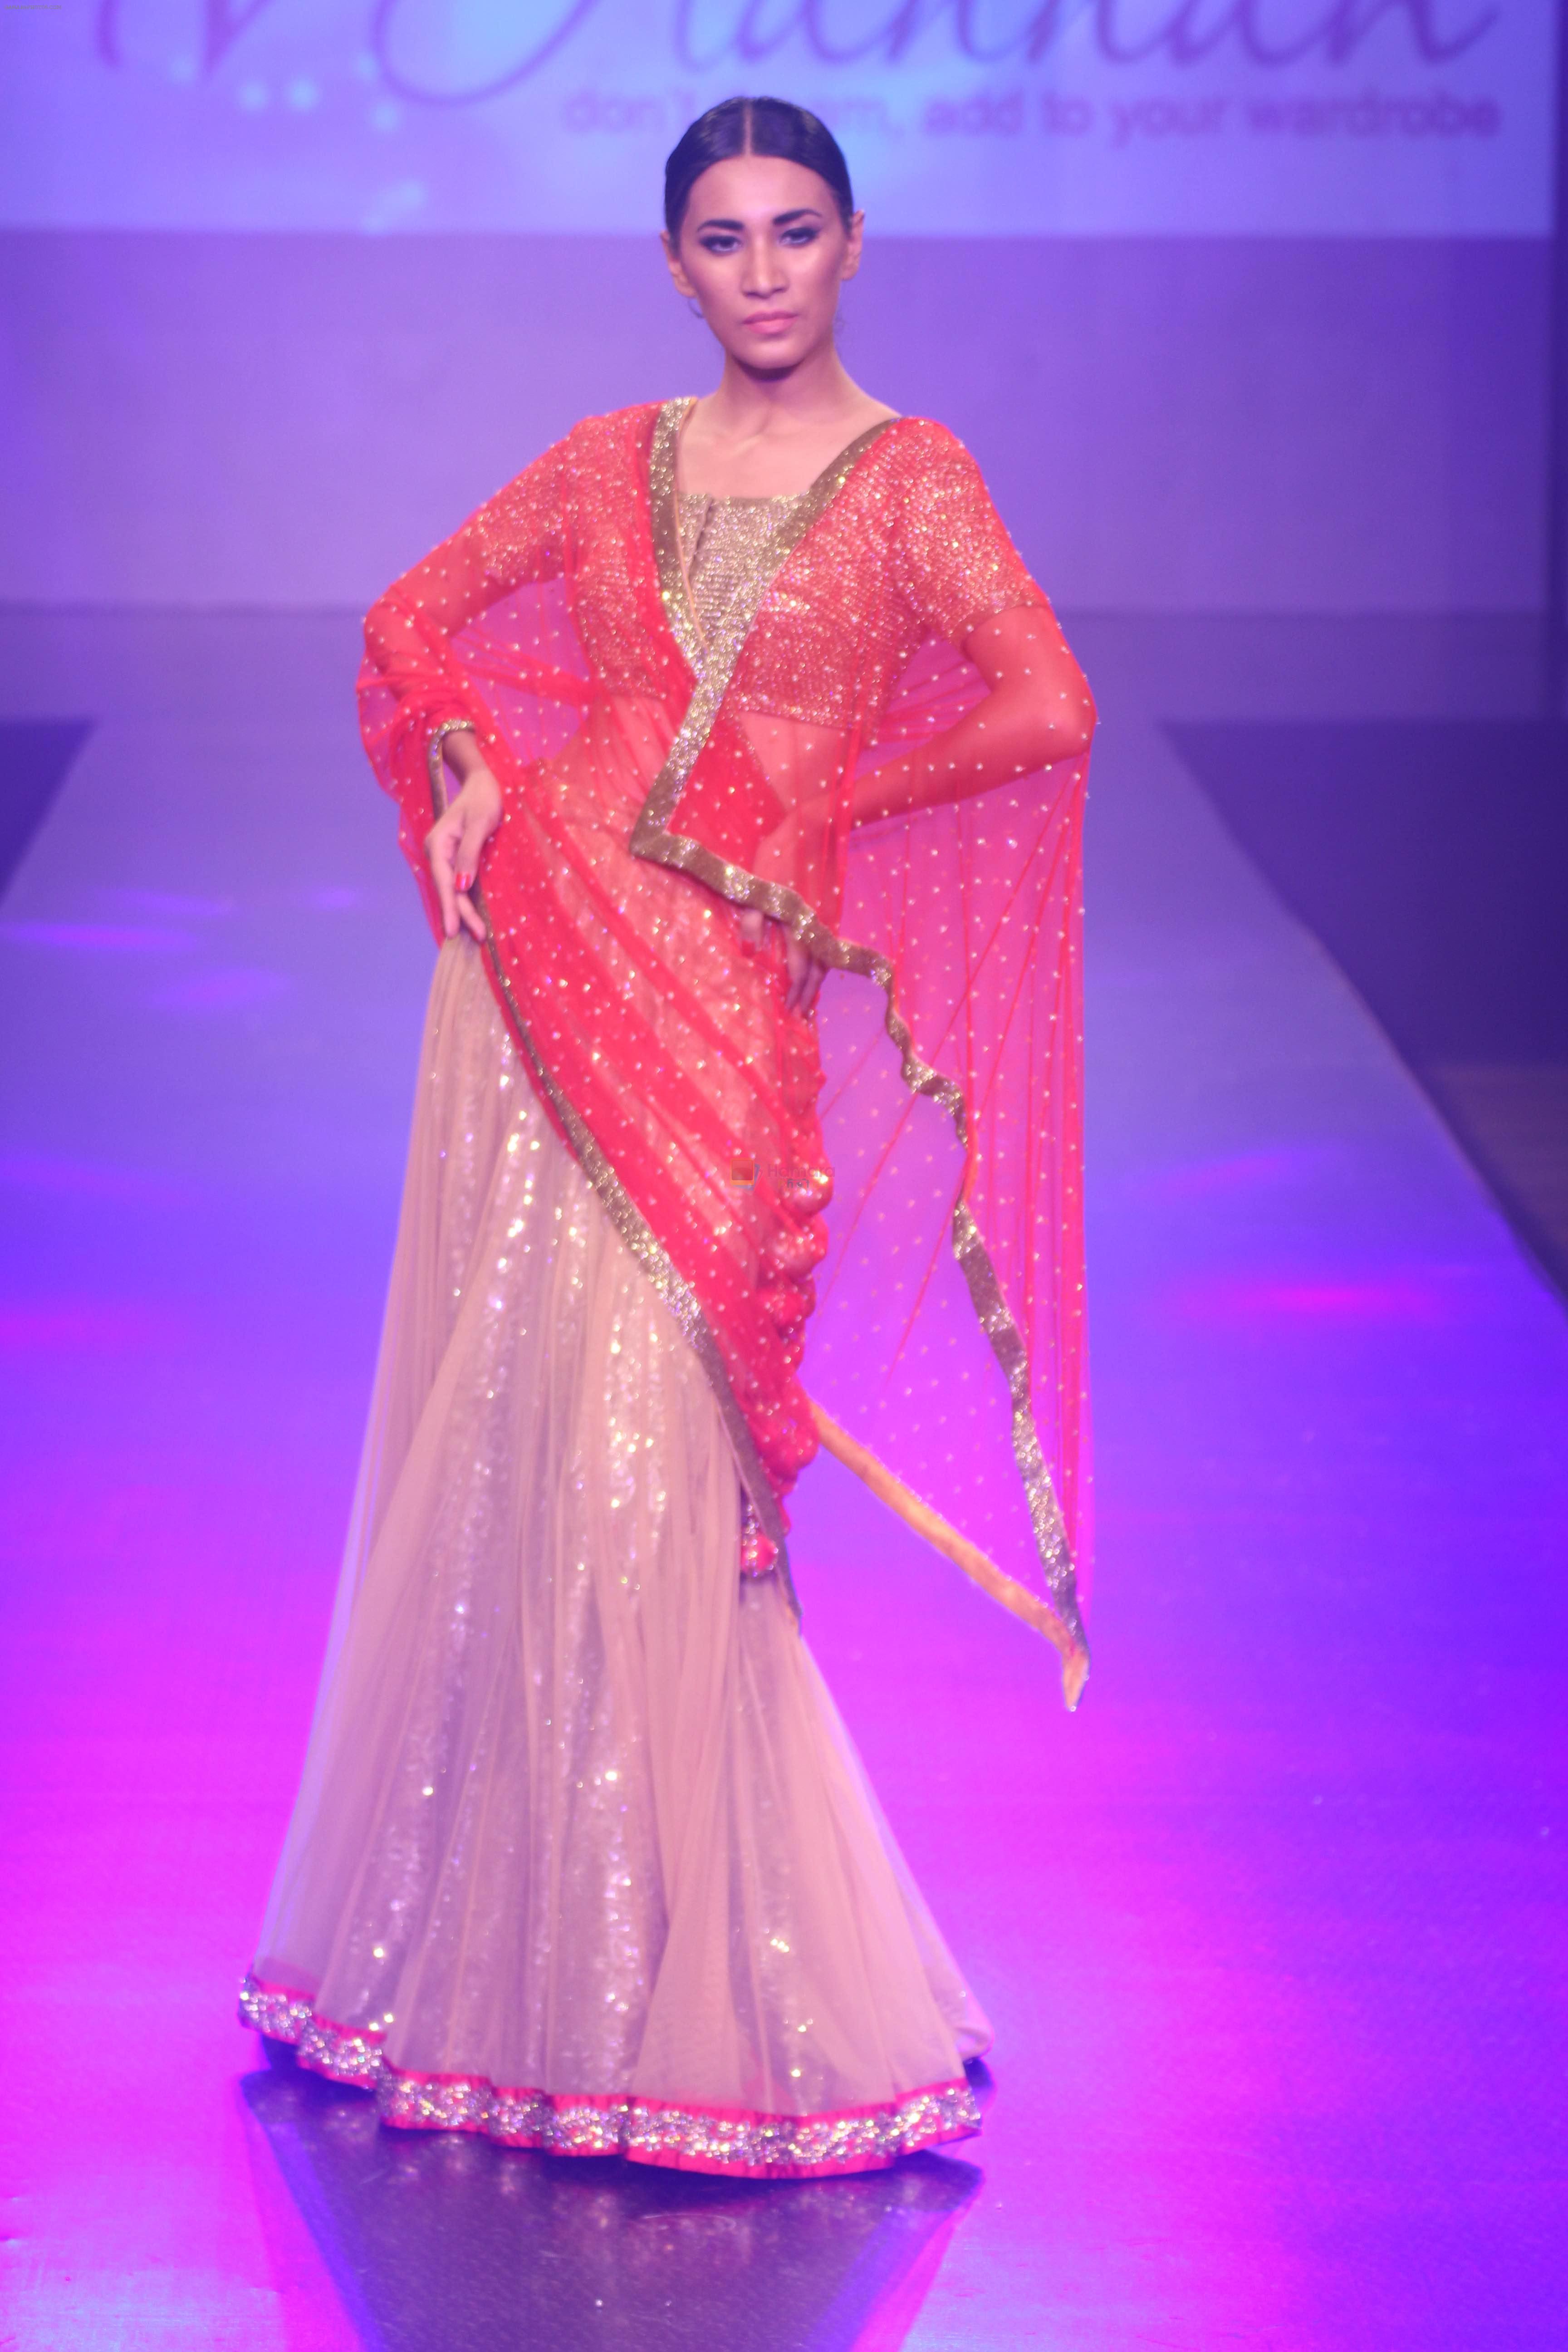 Model at Jaipur based Designer Rajneeral Babuta promotes peace & love at Shaan - E - Pakistan on 13th Sept 2015